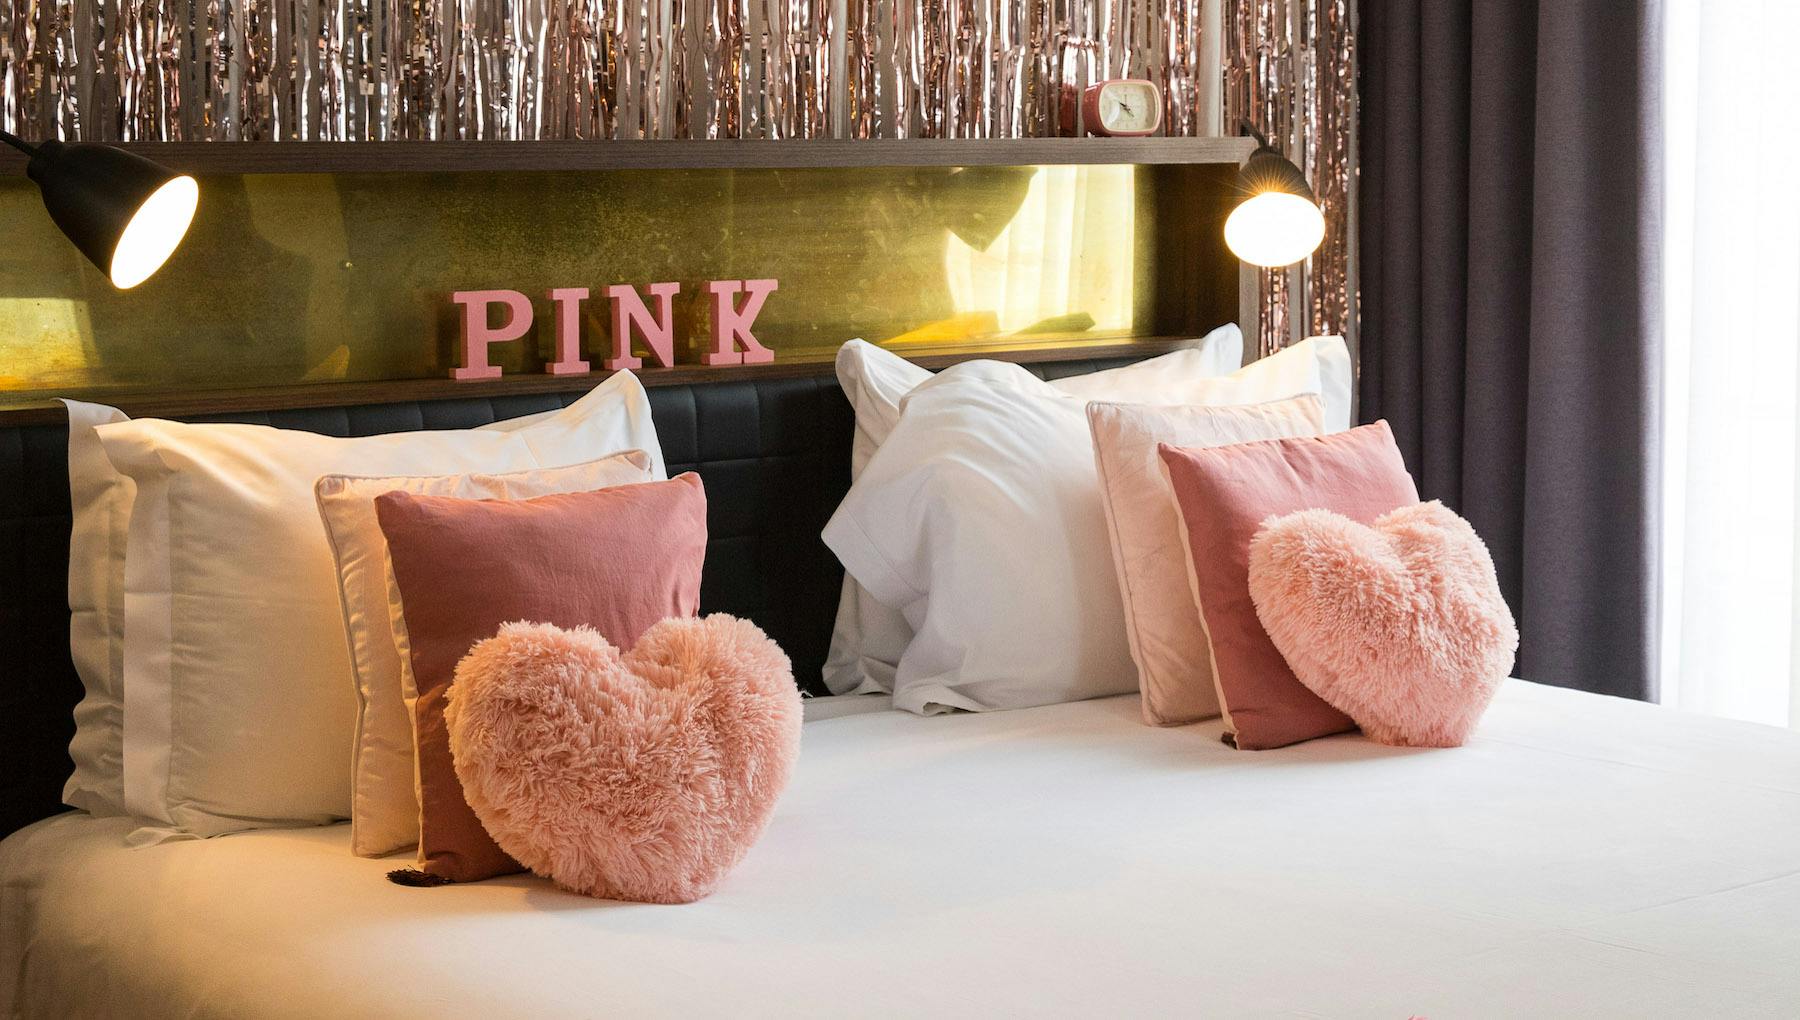 INK Hotel Amsterdam colours pink during pride week